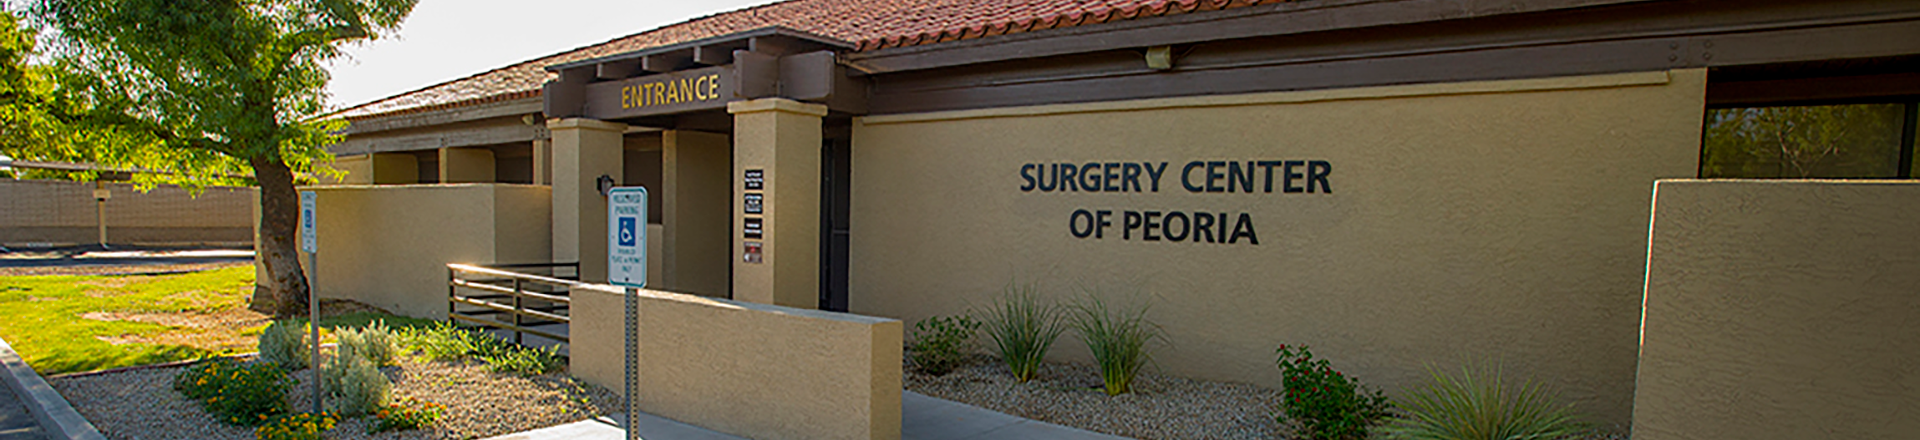 Surgery Center of Peoria